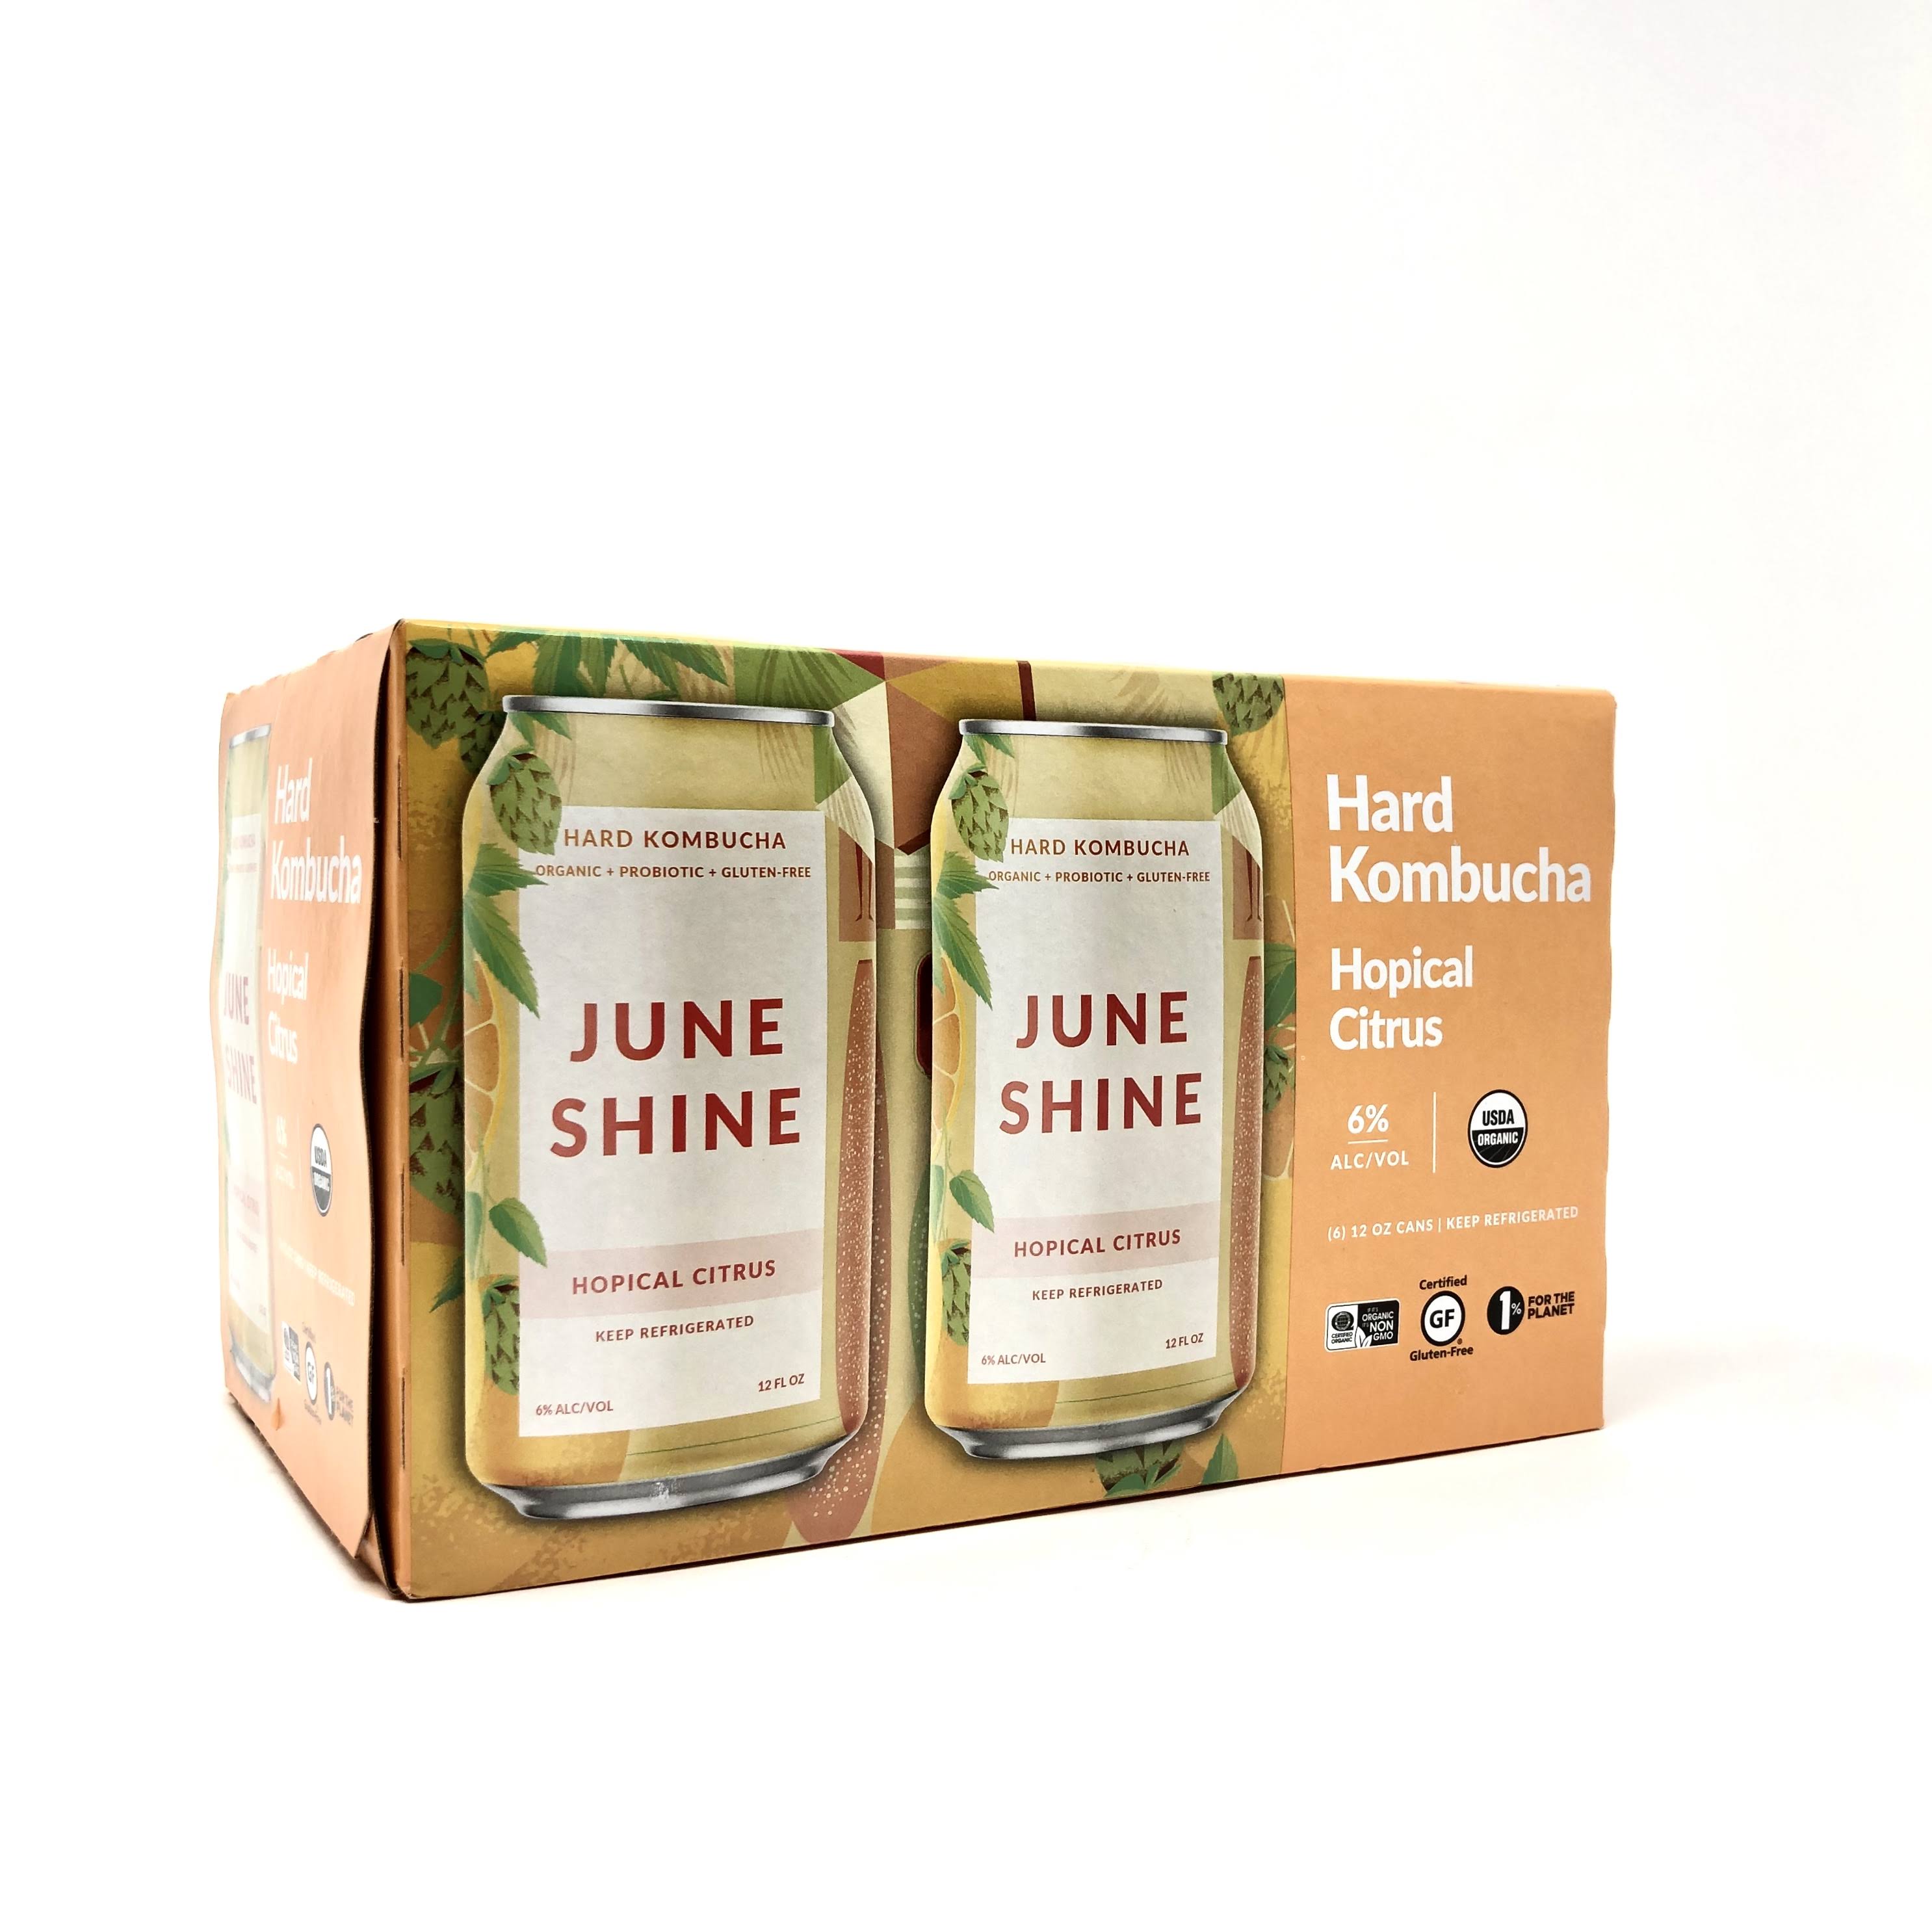 June Shine Hard Kombucha, Hopical Citrus, 6 Pack - 6 pack, 12 oz cans